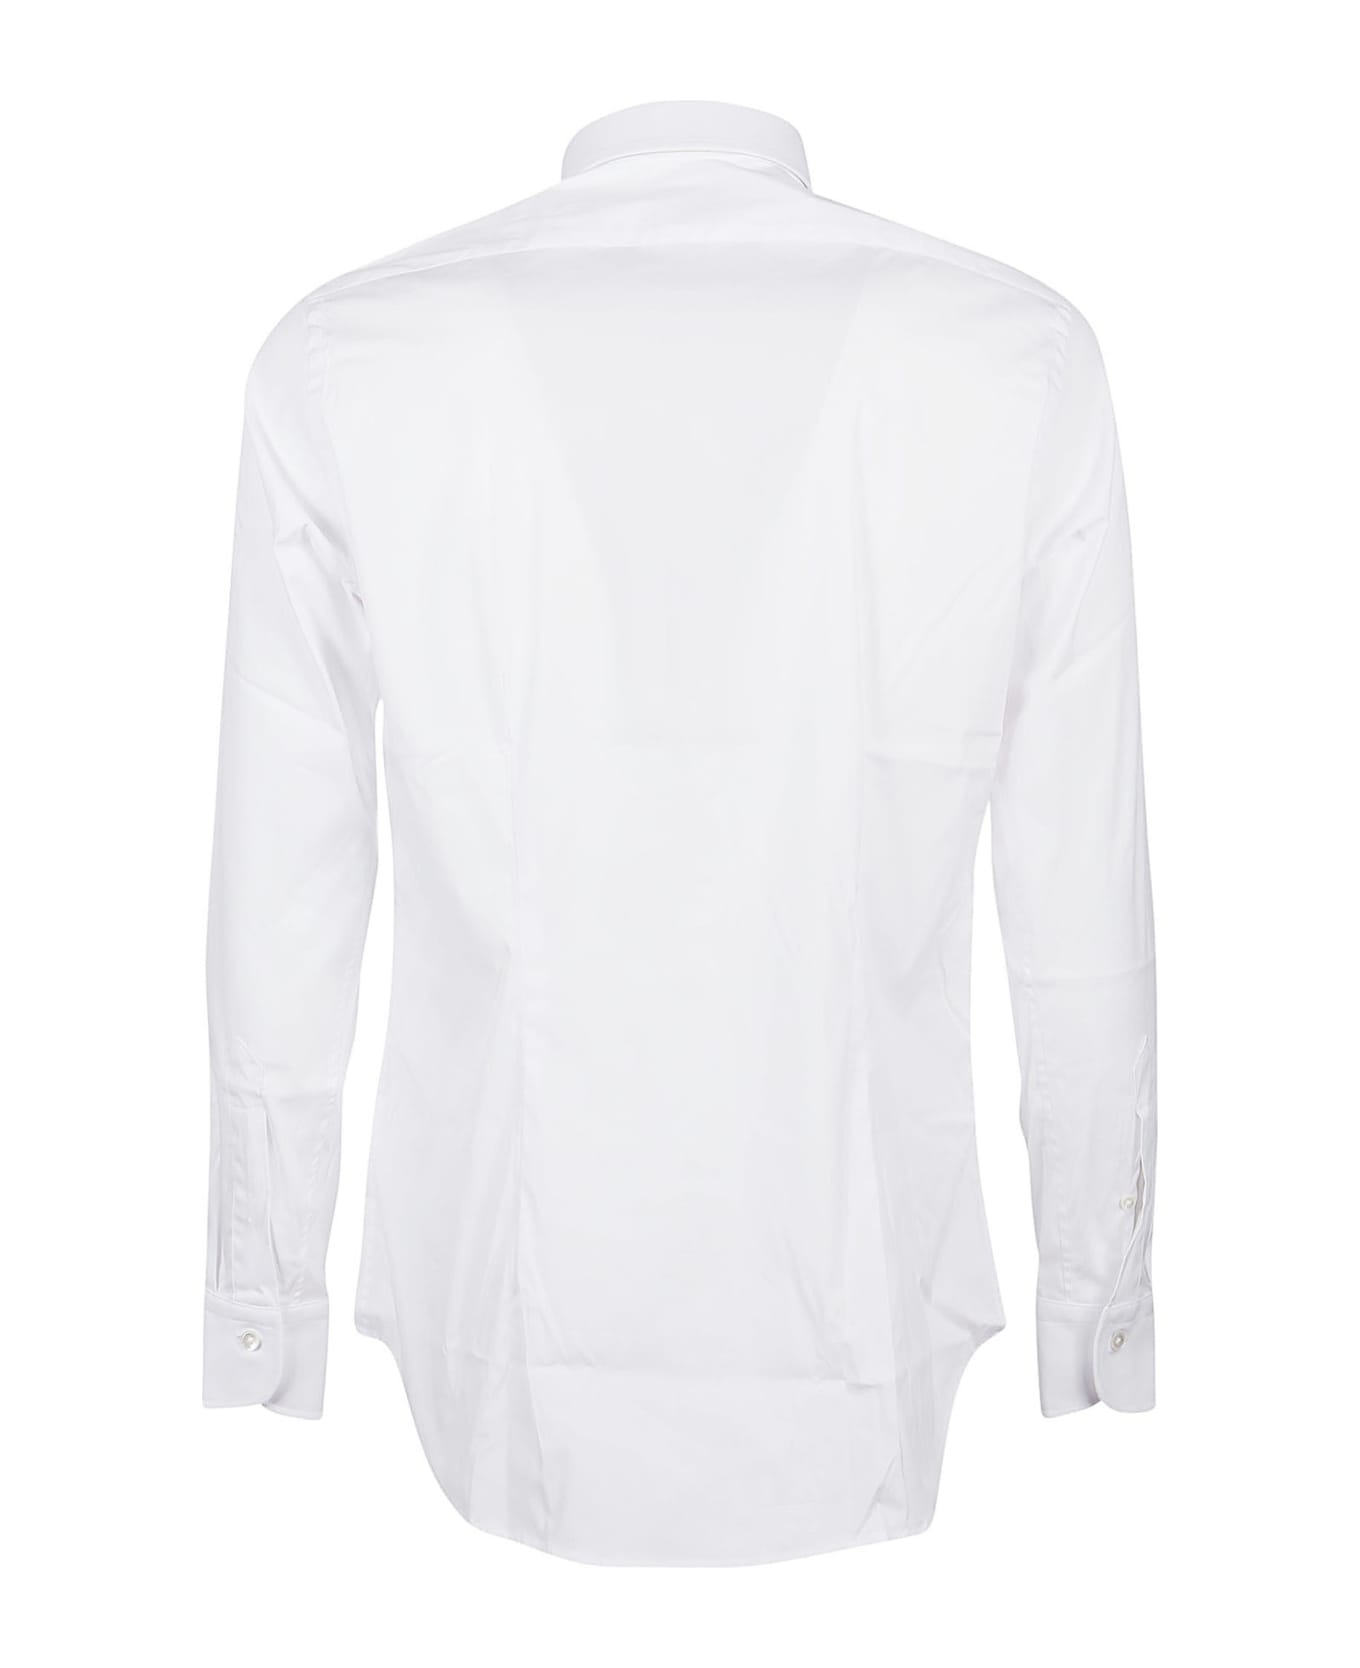 Bagutta Long Sleeve Shirt - Bianco